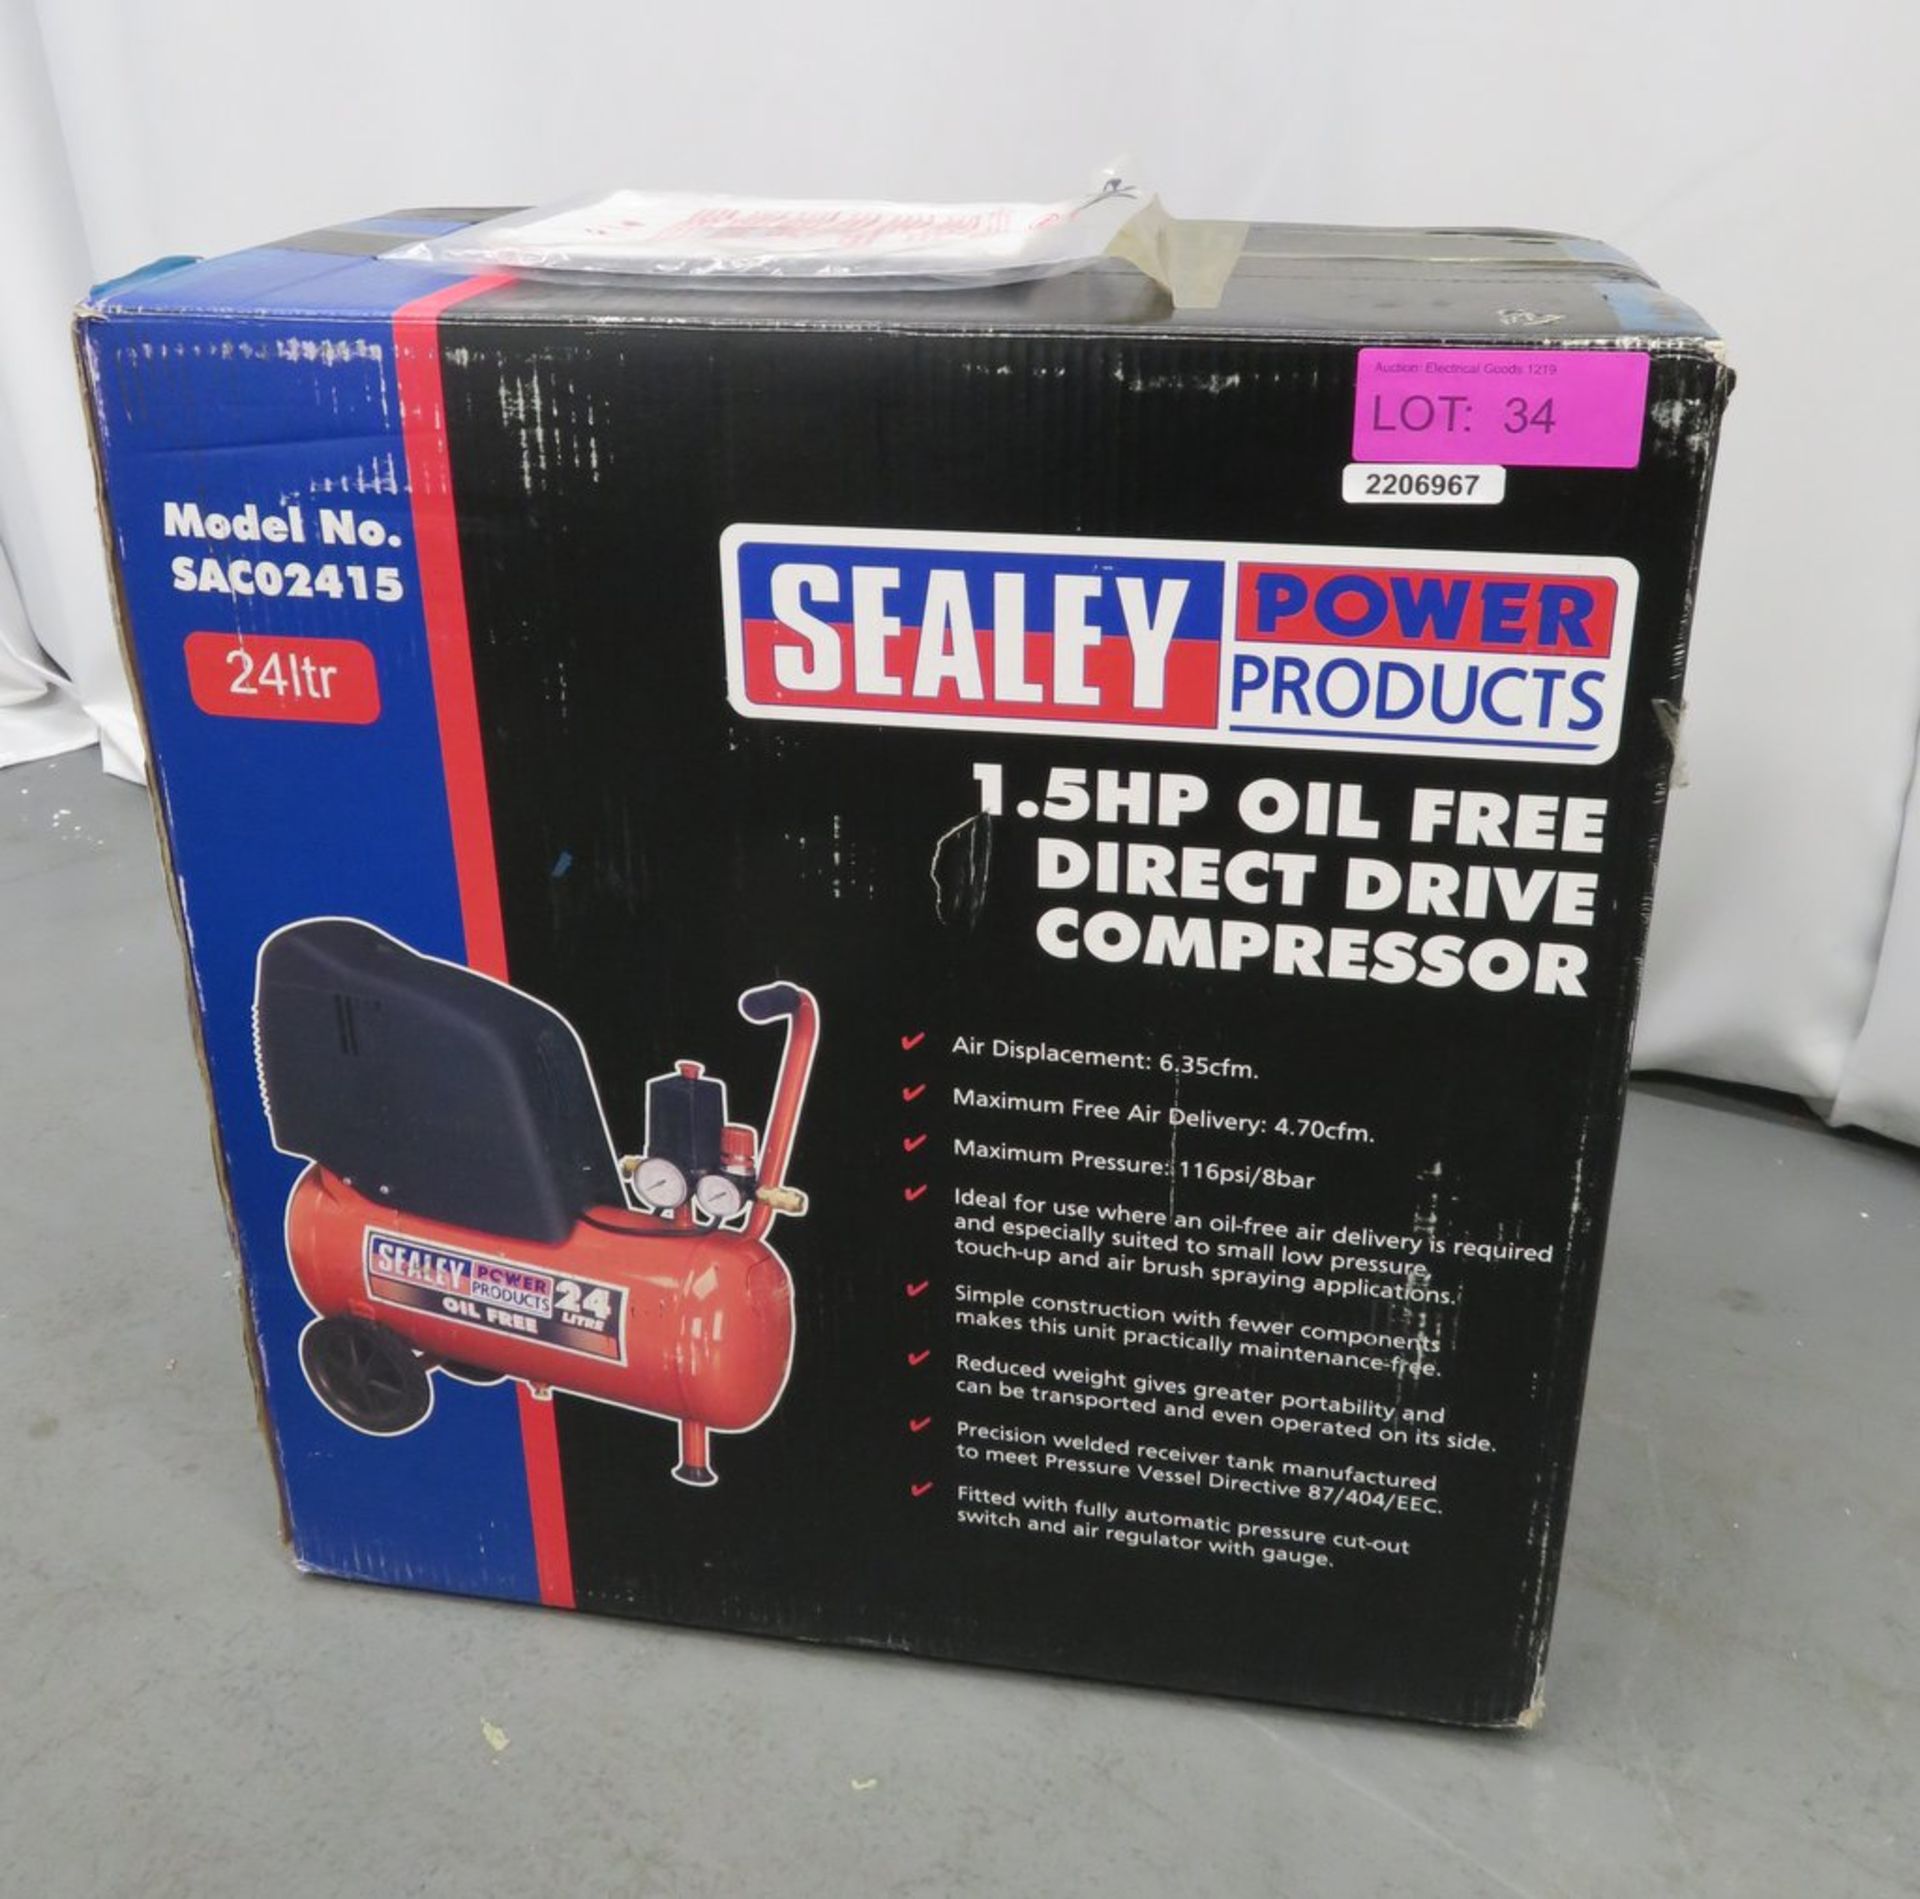 Sealey 24 Litre Electrical Compressor Belt Drive 1.5hp Oil Free. Model: SAC02415. - Image 9 of 10